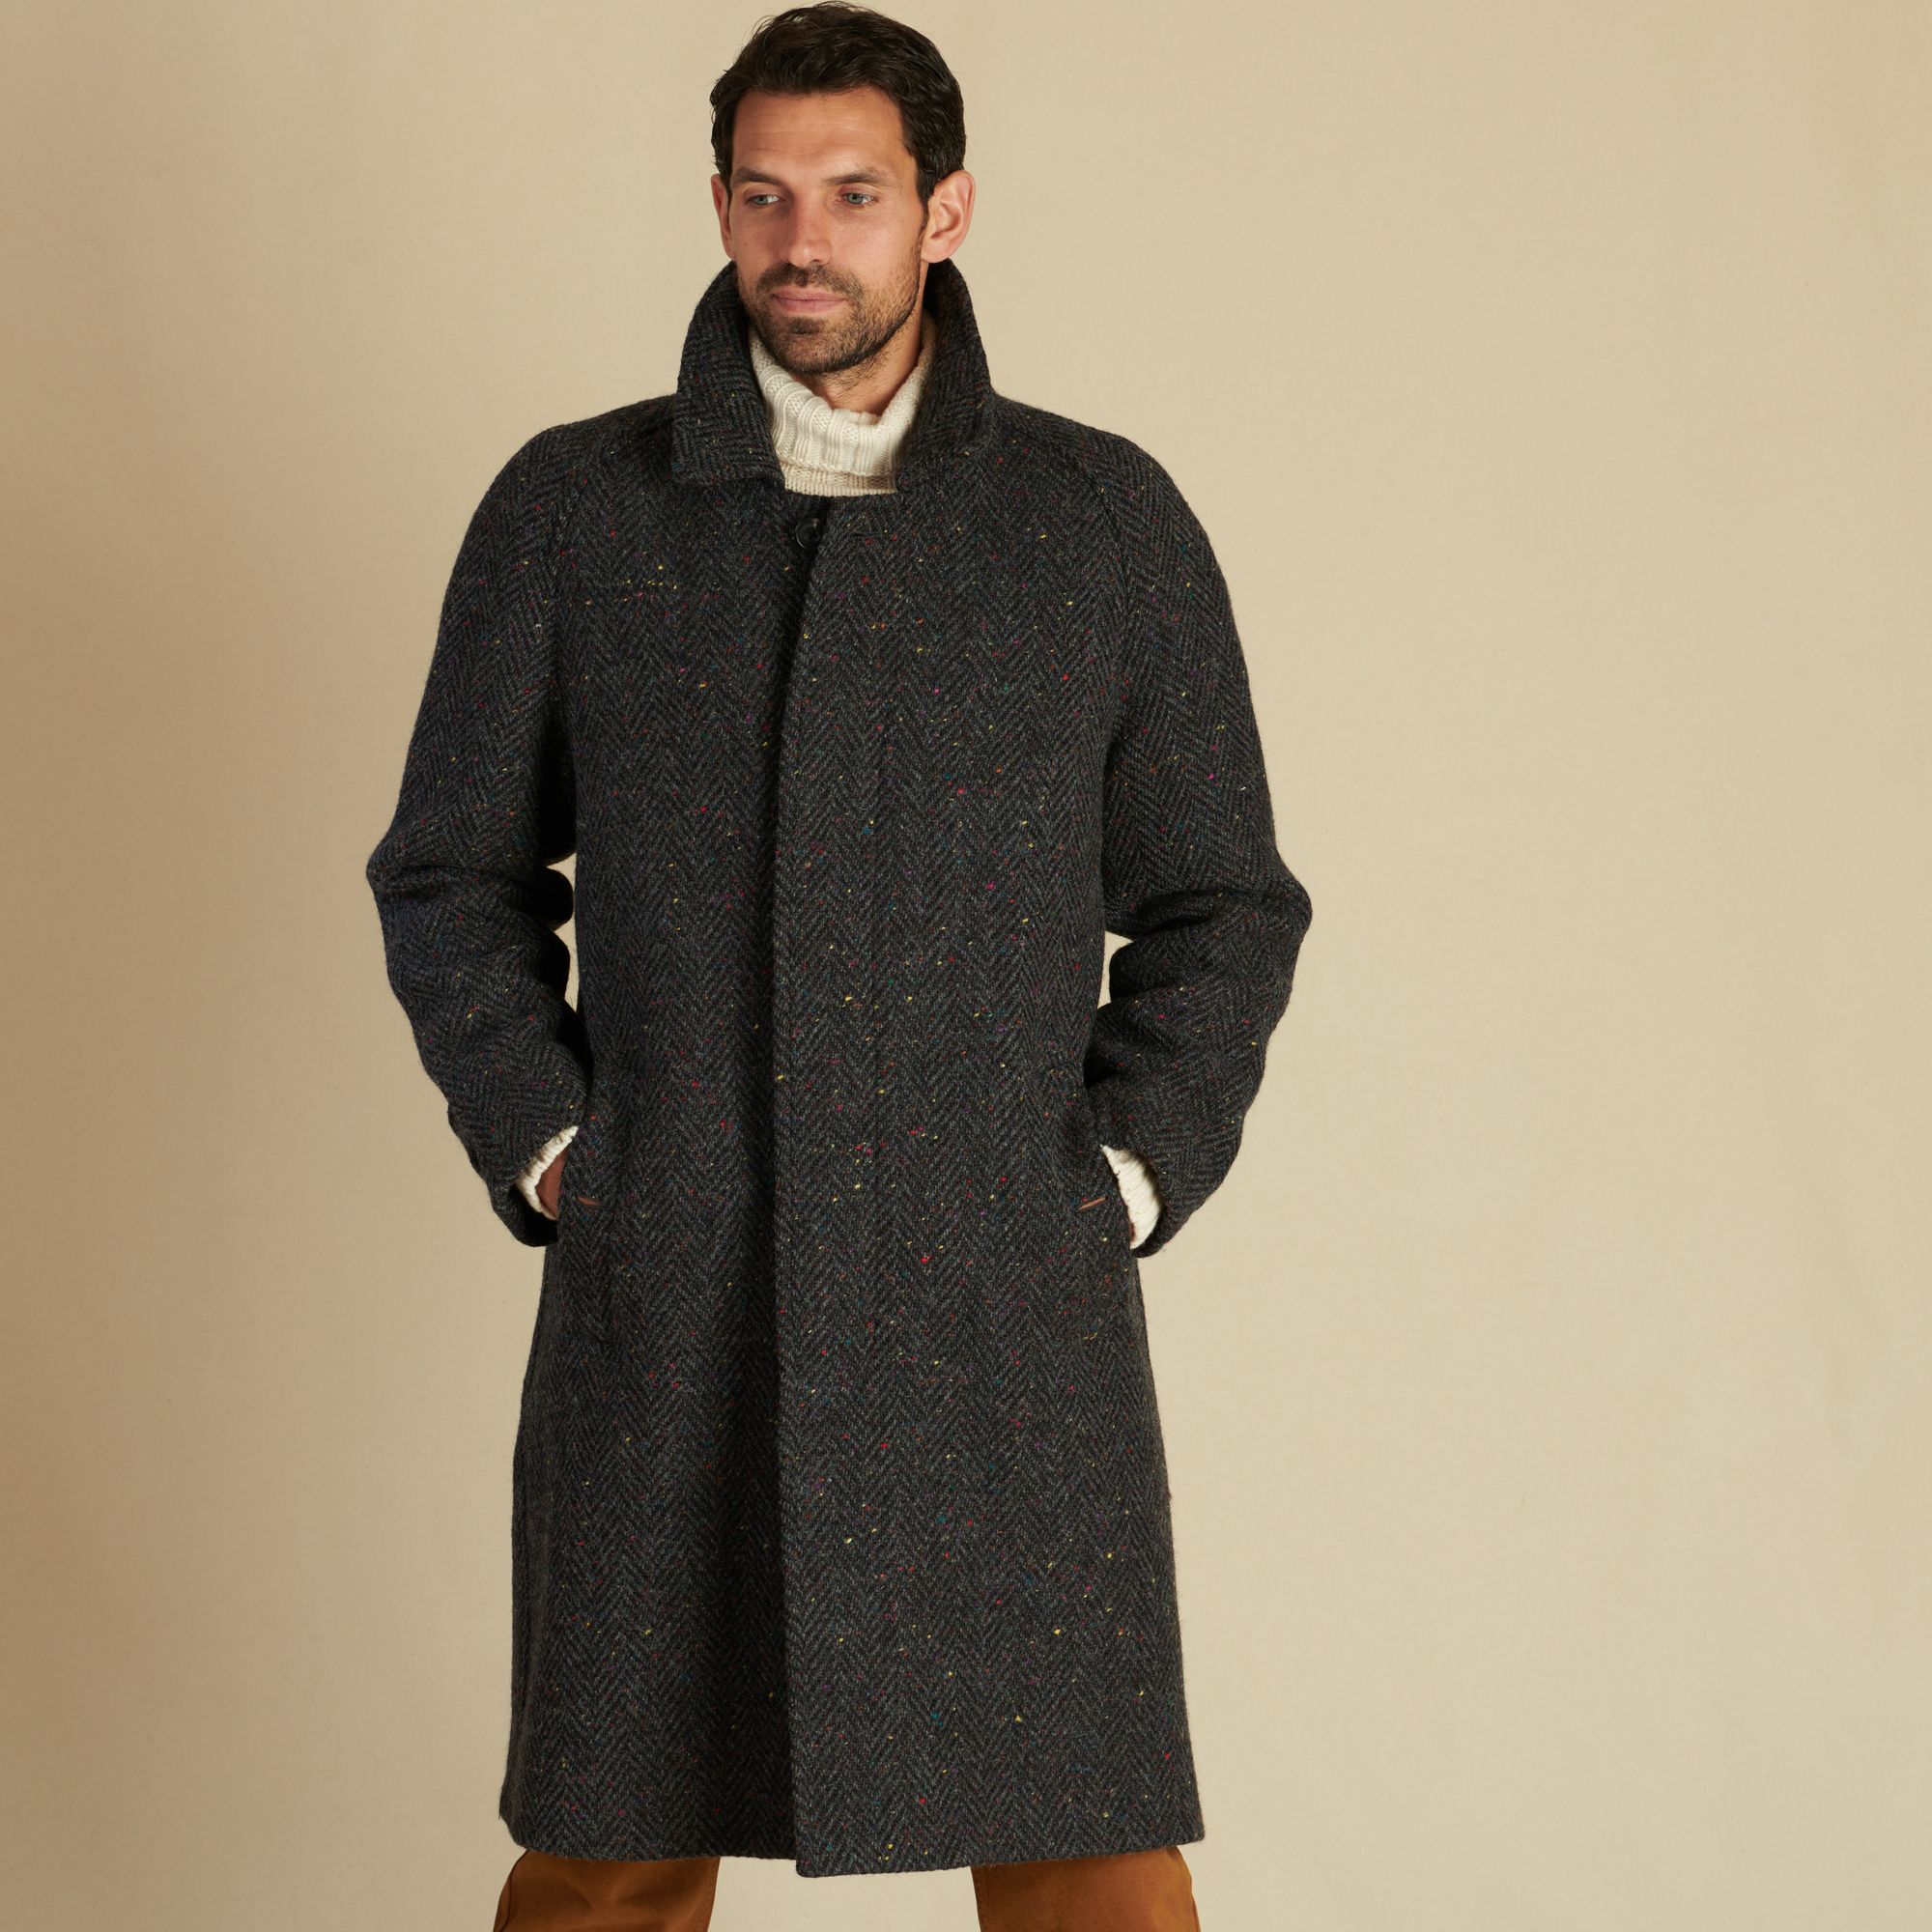 Grey Herringbone Donegal Follifoot Coat | Men's Country Clothing | Cordings